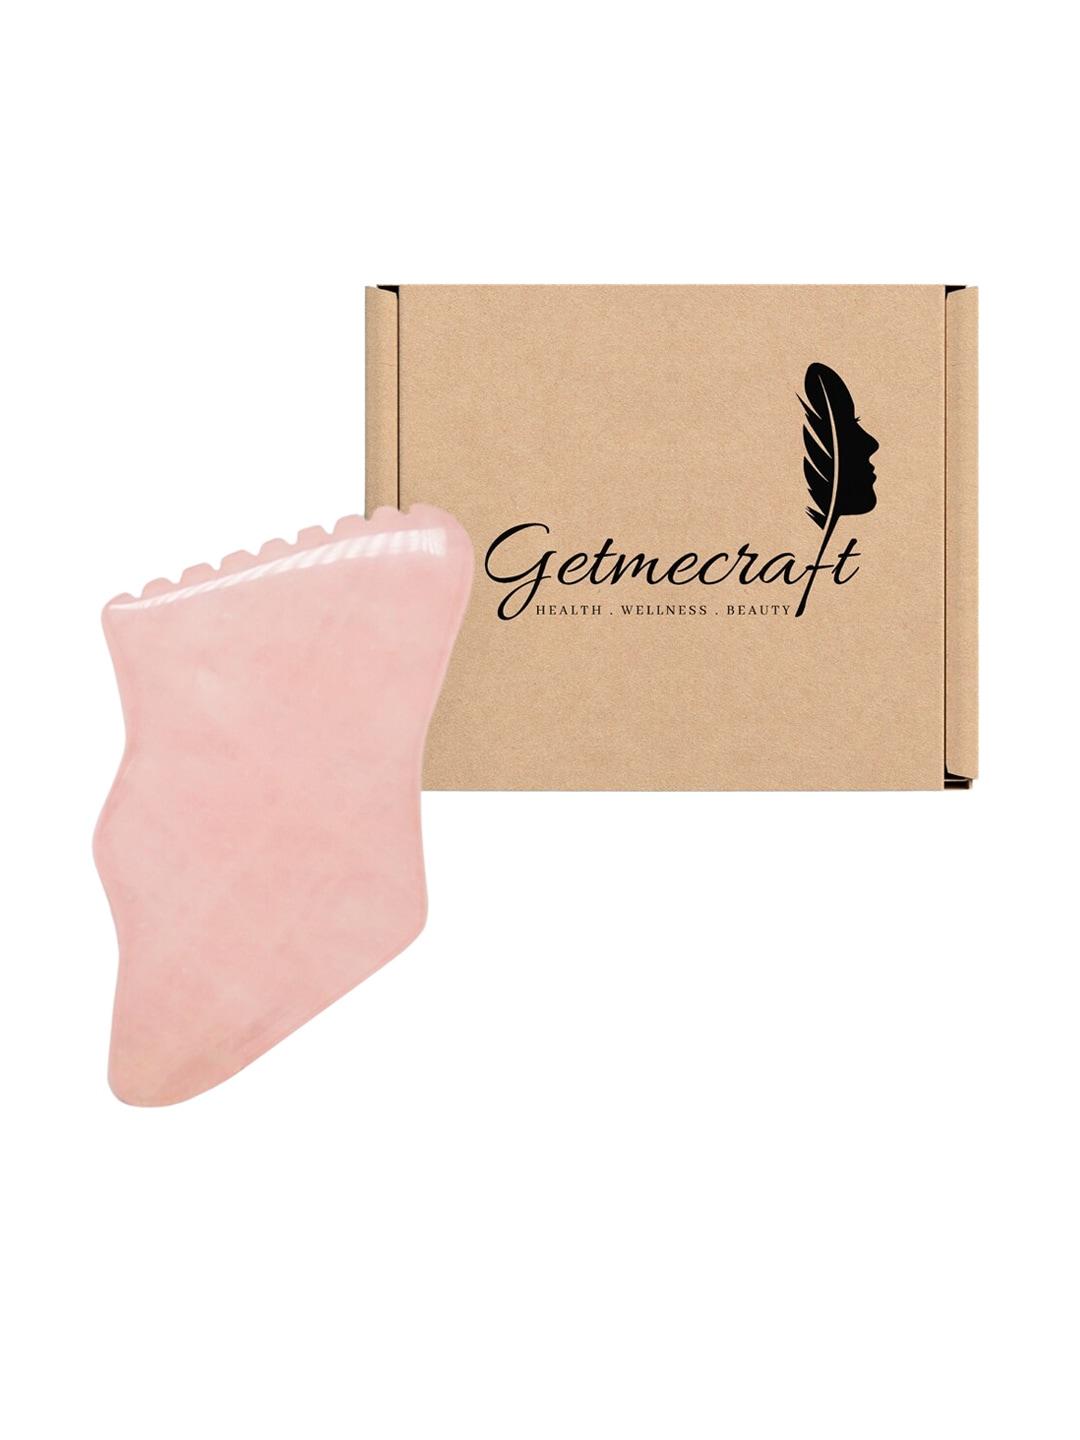 Getmecraft Rose Quartz Gua Sha Facial Massage Tool with Teeth Shape Sides & Ridges